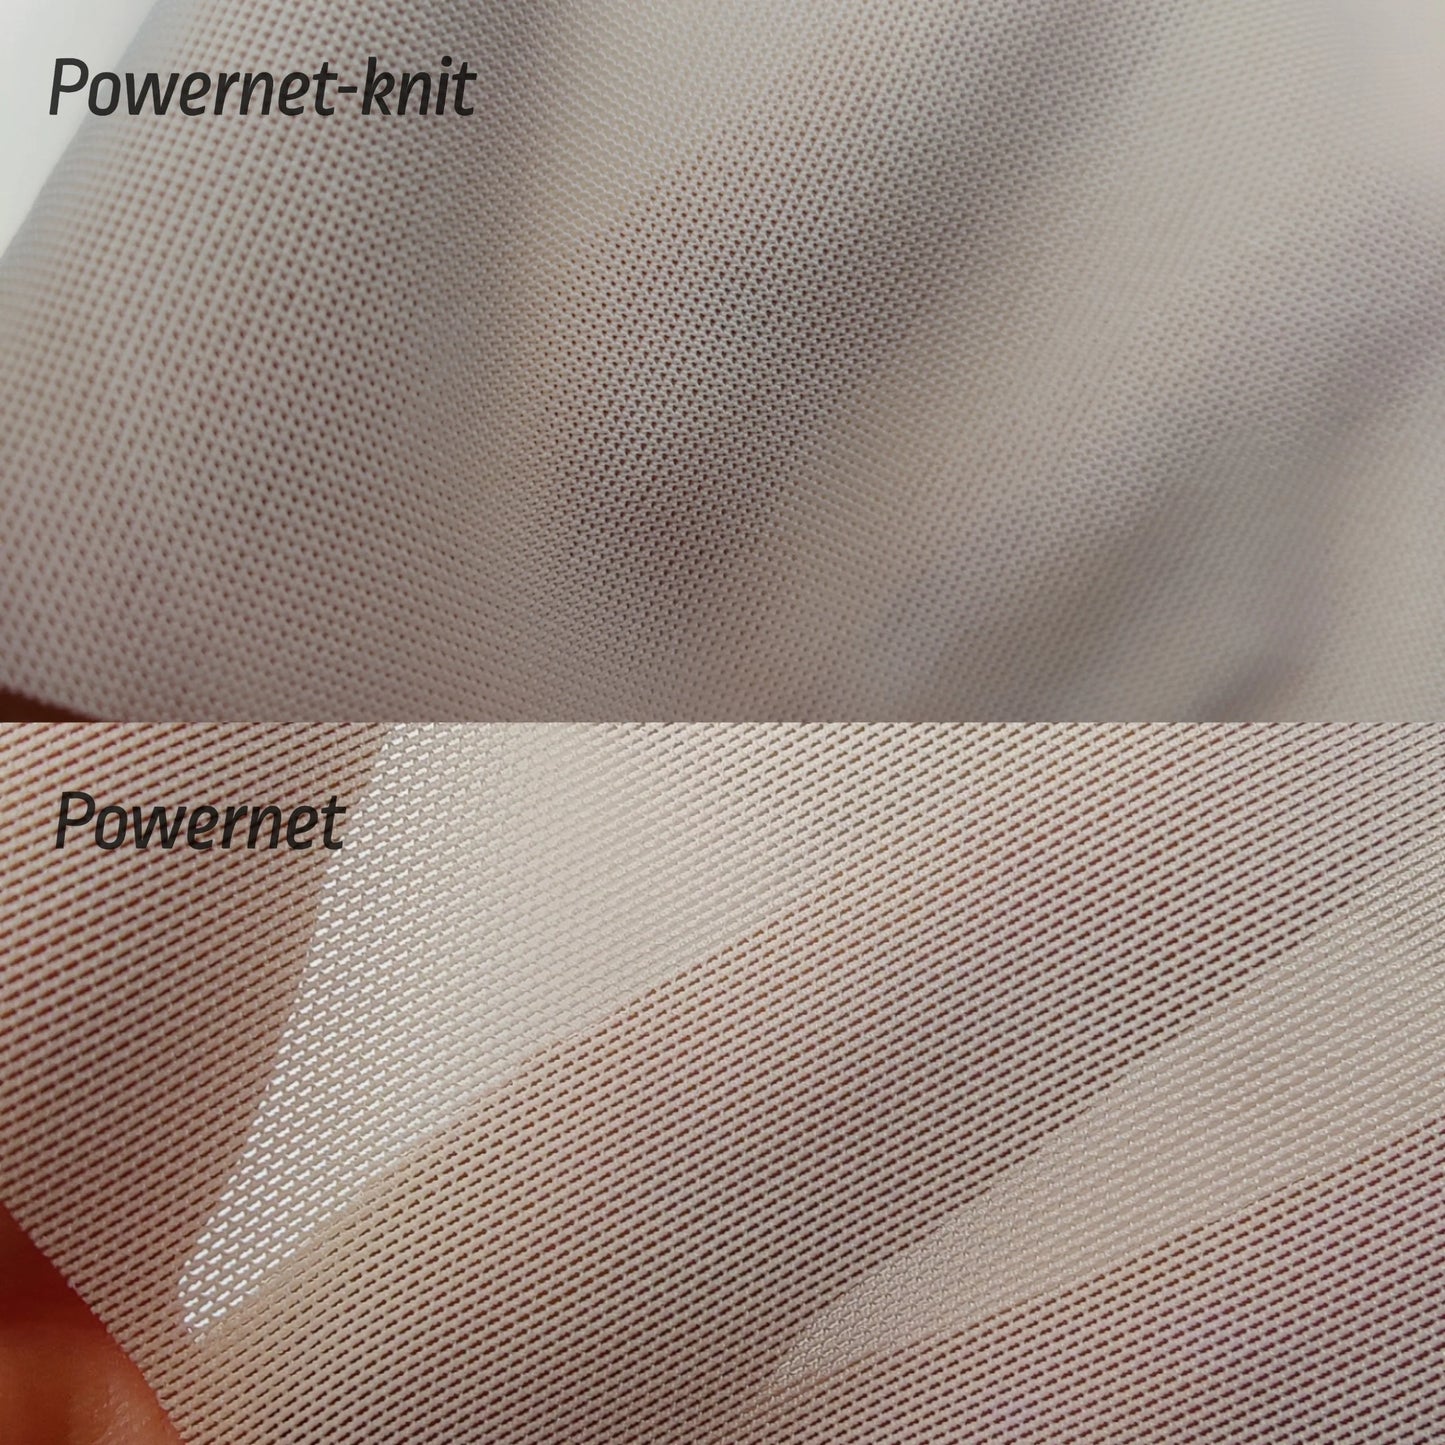 Powernet-Knit silver peony new IDpwx8 LingerieMeMade